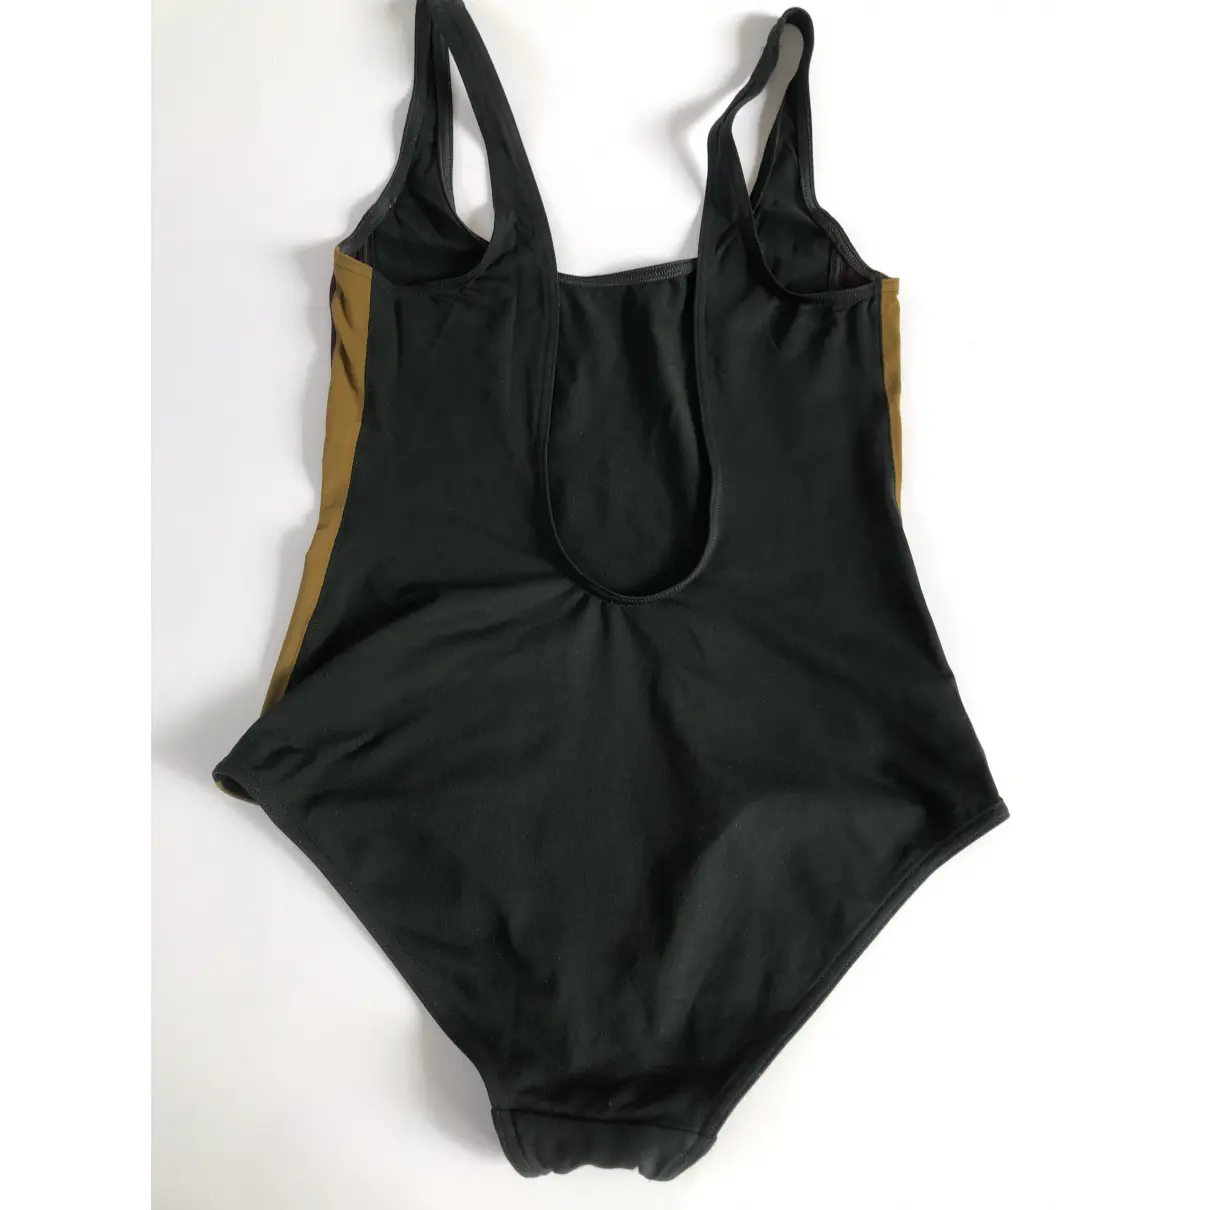 Buy Eres One-piece swimsuit online